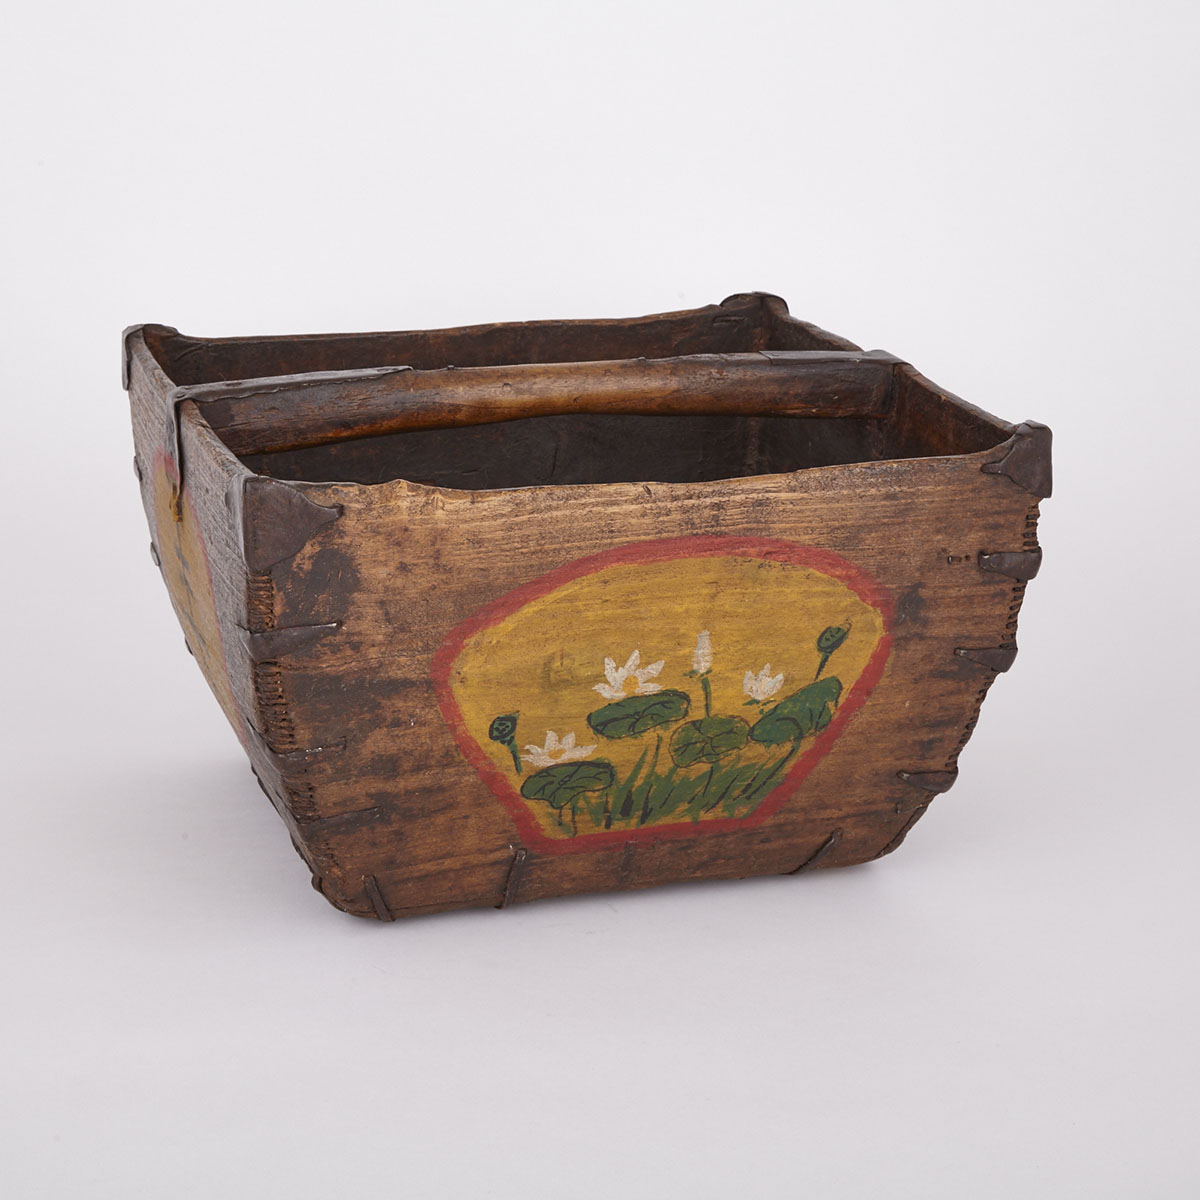 Wooden Rice Basket, 19th Century